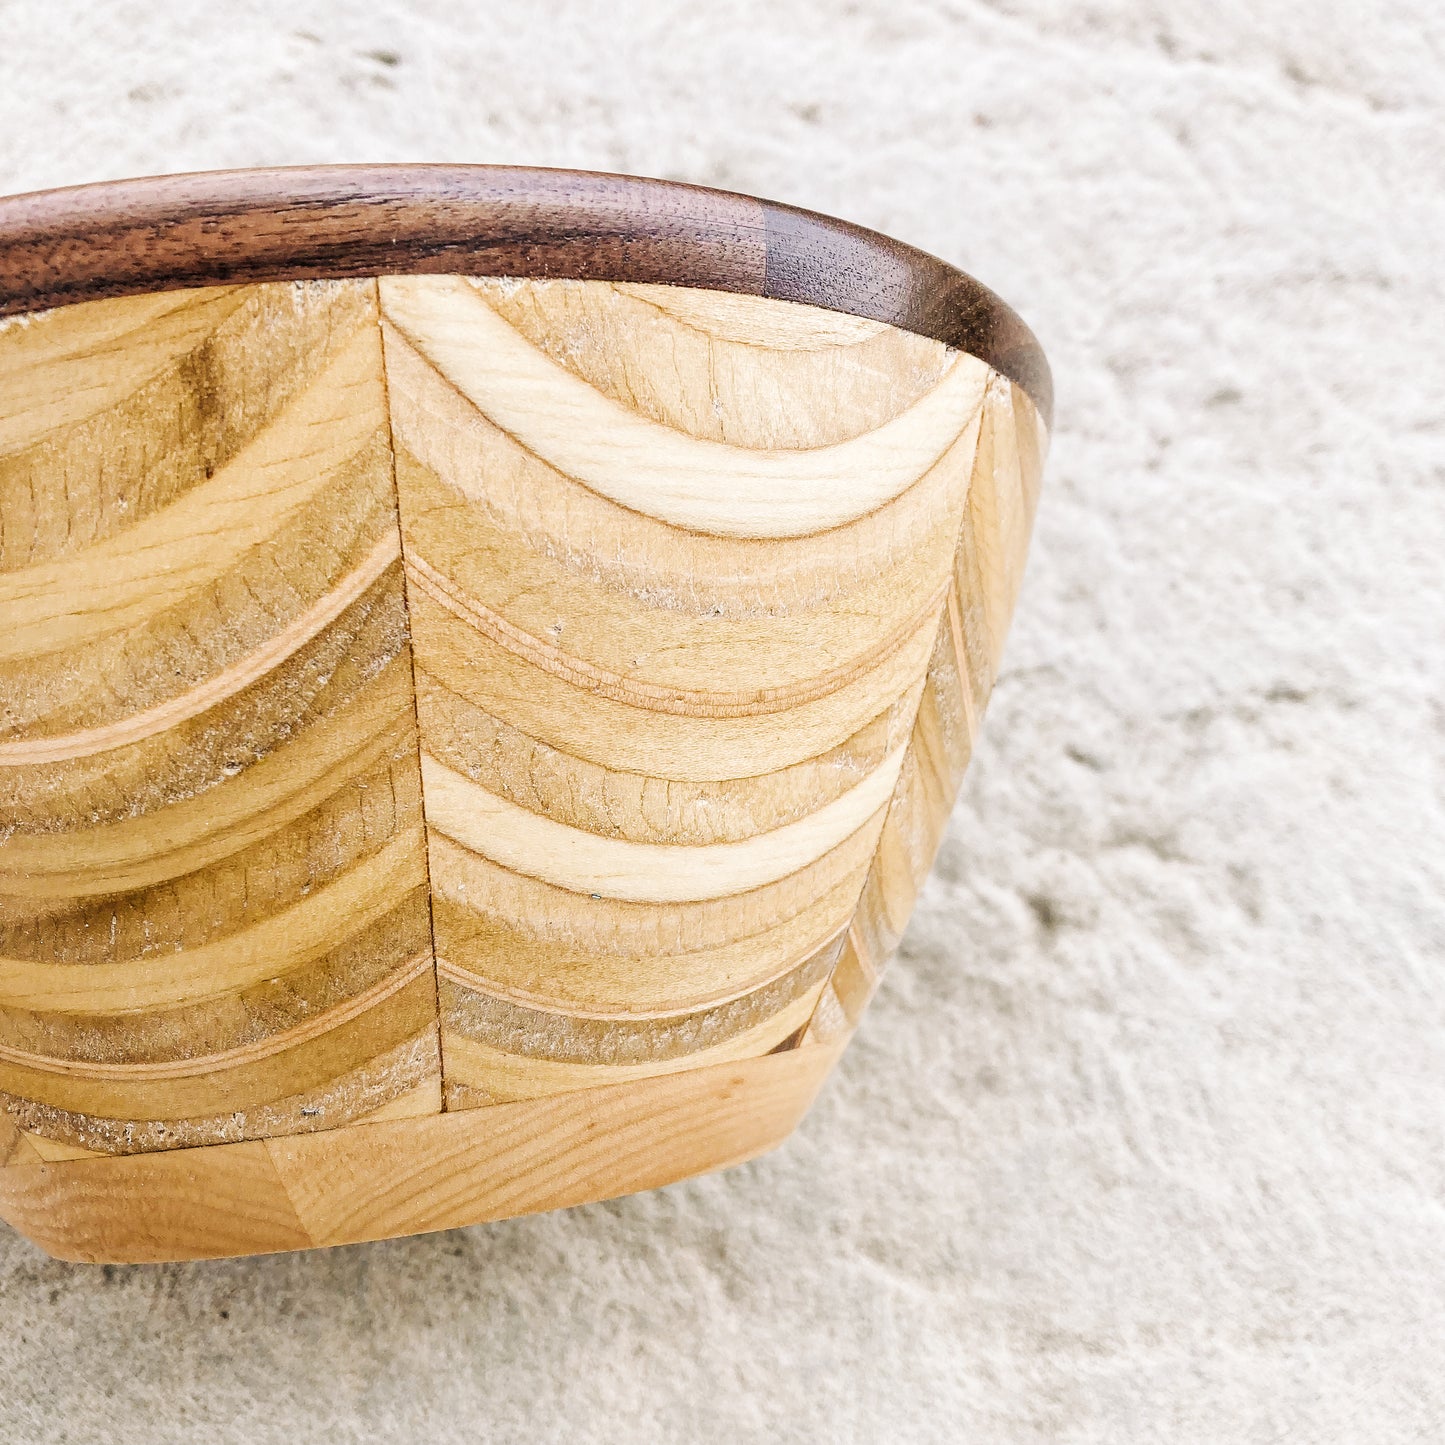 Medium-Sized Wooden Bowl